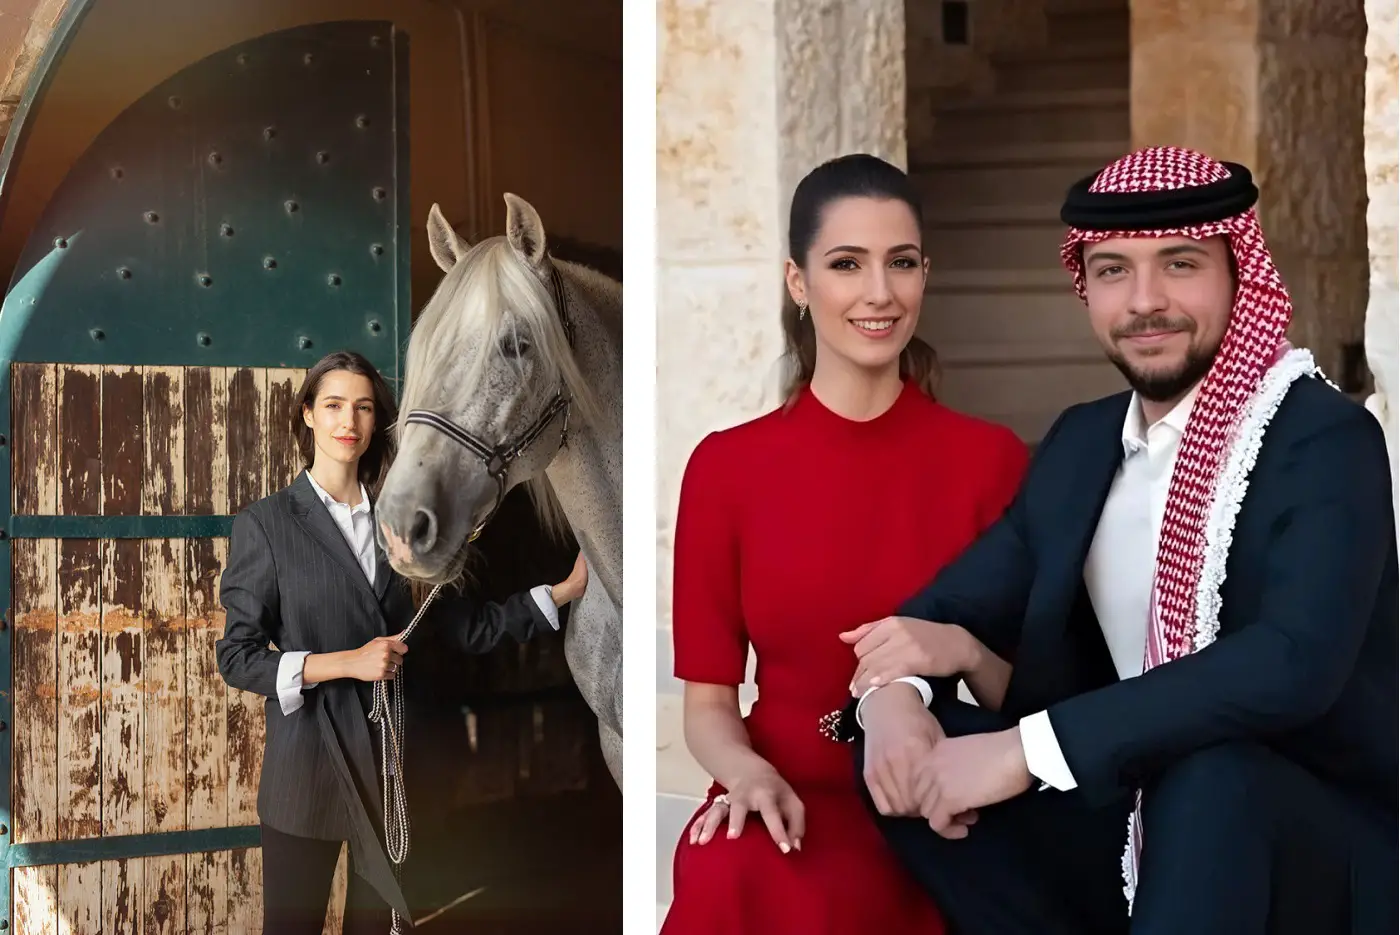 New Portraits of Princess to be Rajwa Khaled ahead of her wedding